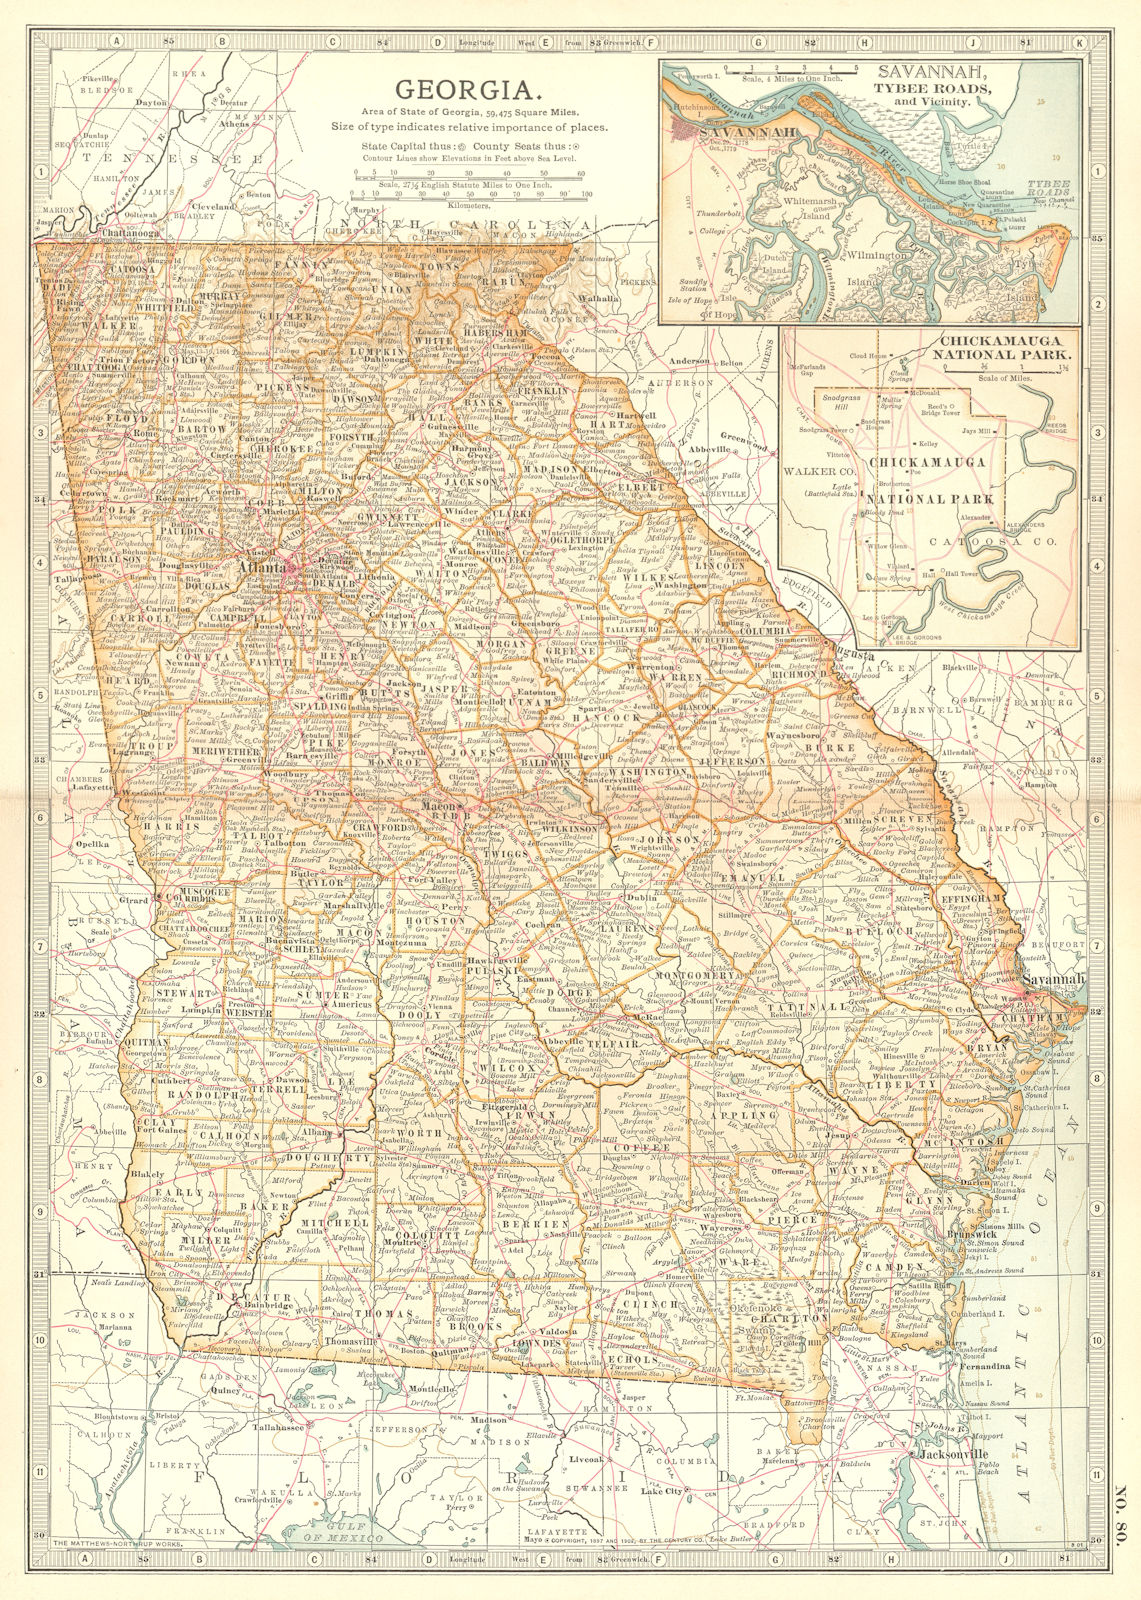 GEORGIA. with Civil war battlefields/dates. Savannah Chickamauga NP 1903 map